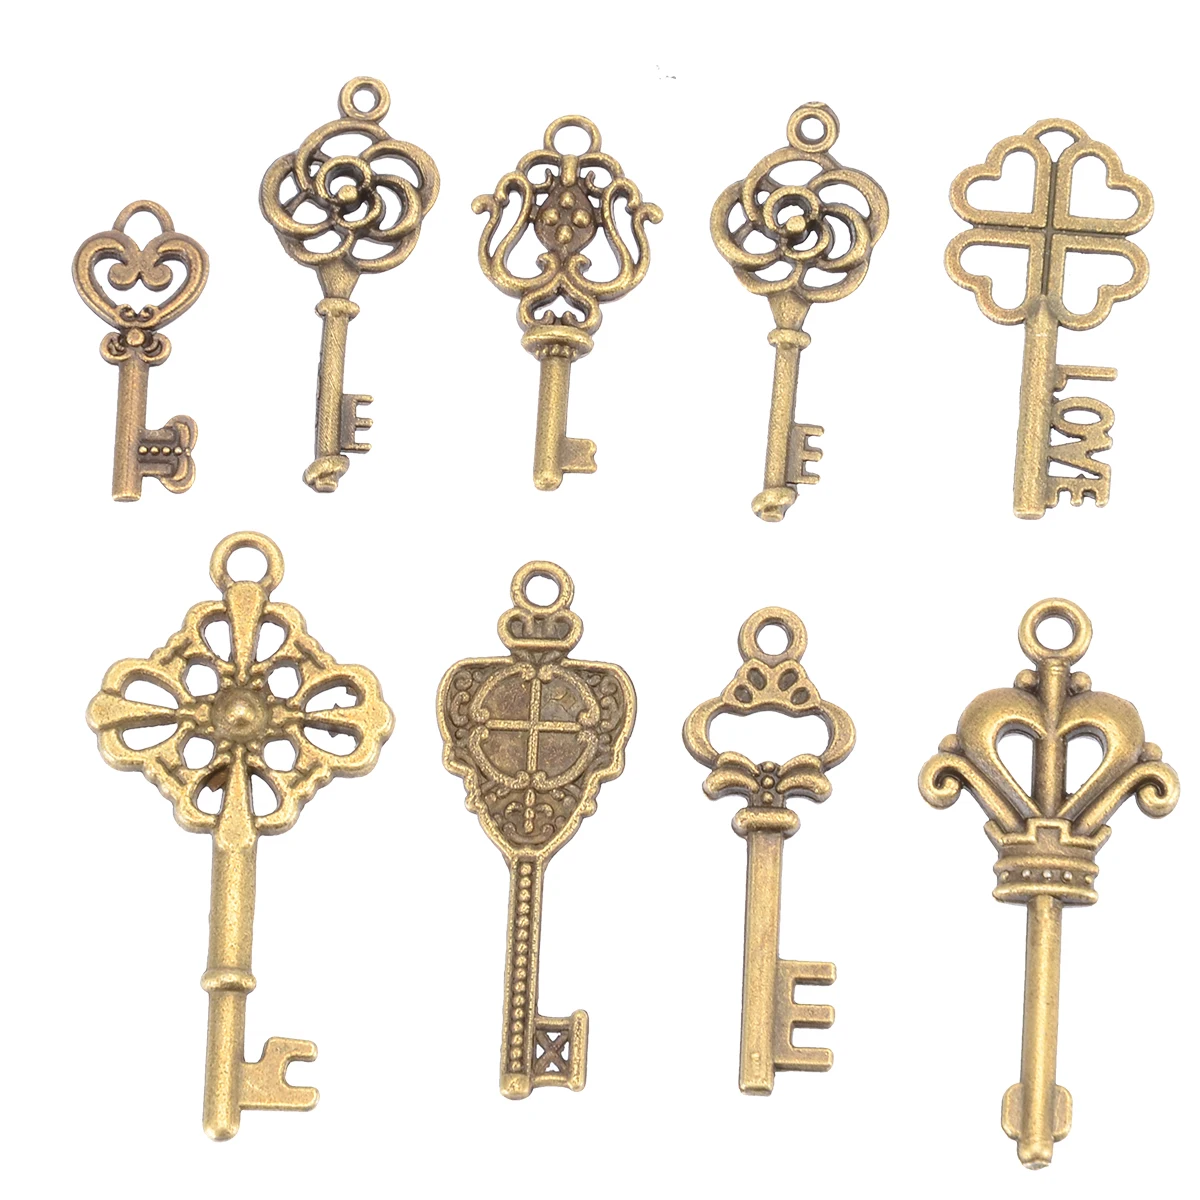 Lyumo Vintage Keys,69pcs Assorted Antique Vintage Bronze Skeleton Keys Fancy Heart Bow Jewelry, Keys Set